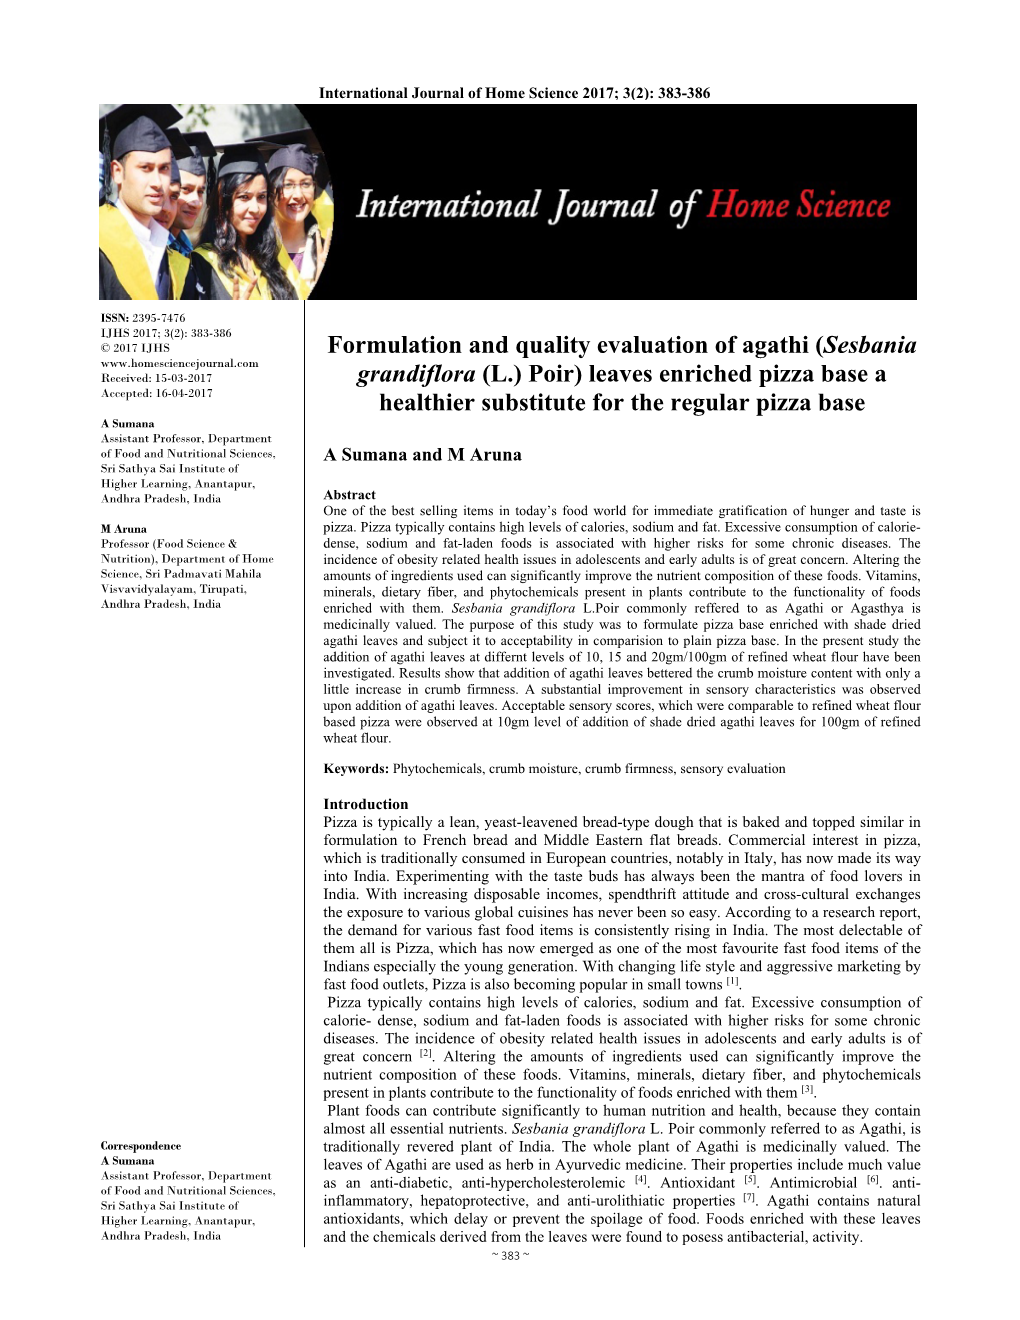 Formulation and Quality Evaluation of Agathi (Sesbania Grandiflora (L.) Poir)